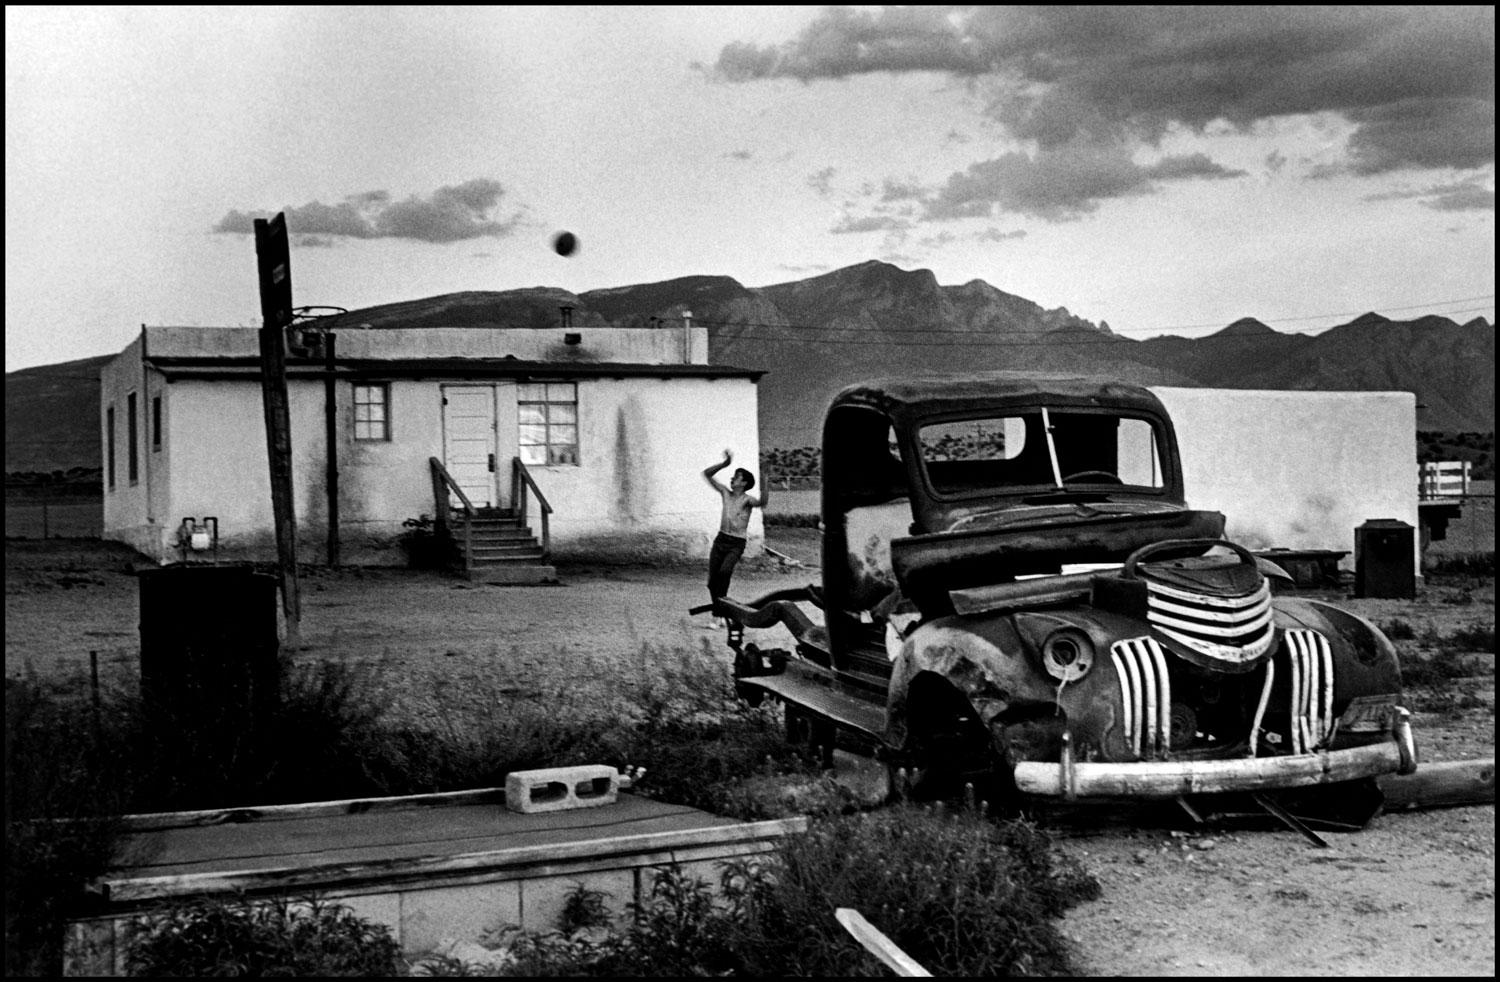 Lianito, New Mexico, 1970